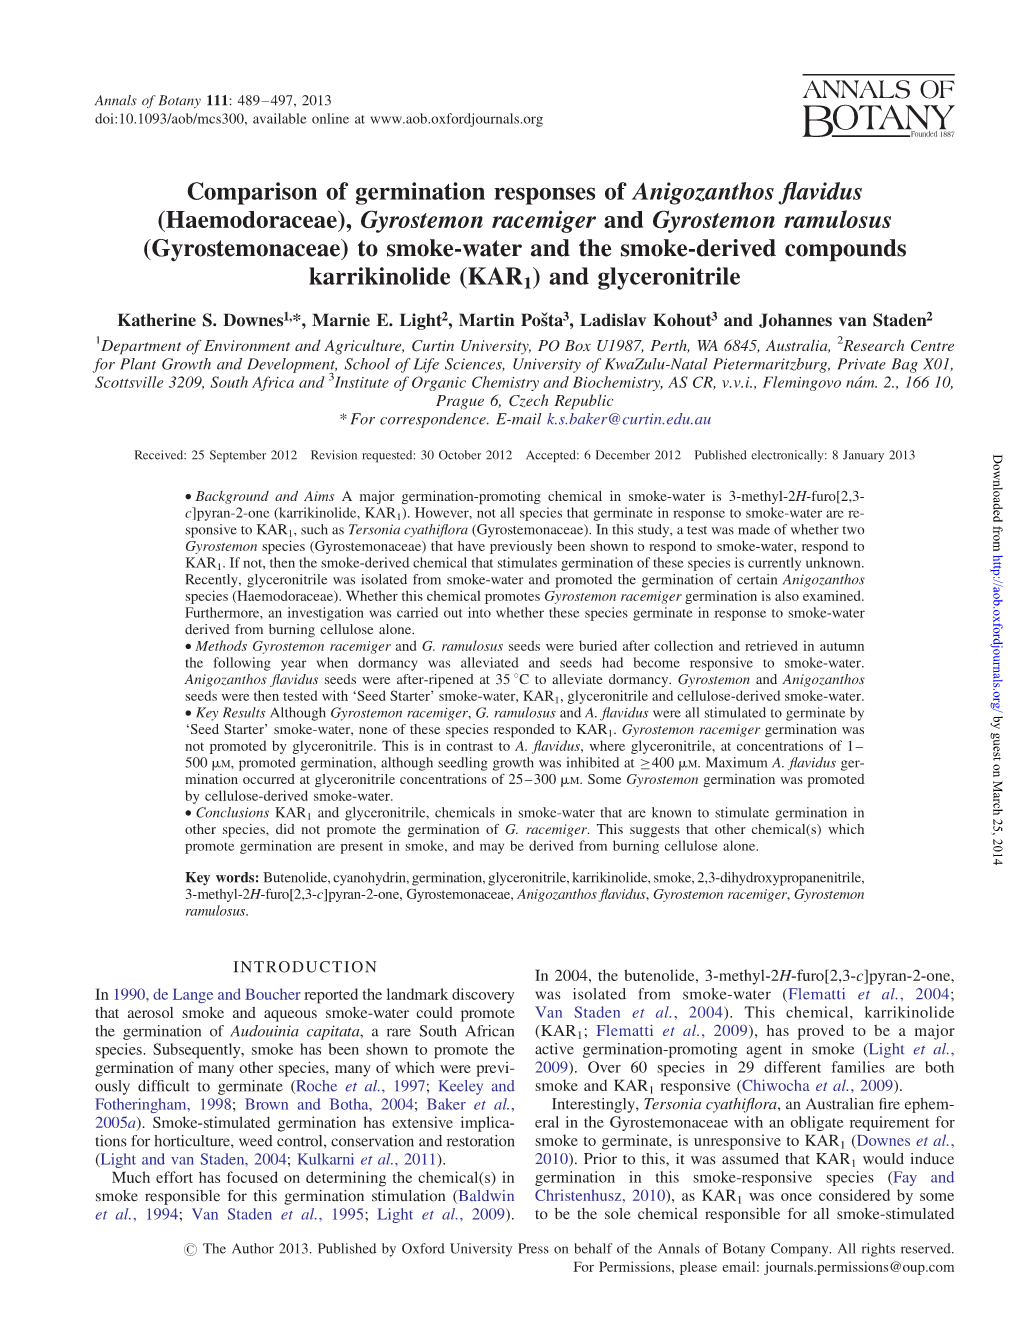 Comparison of Germination Responses of Anigozanthos Flavidus